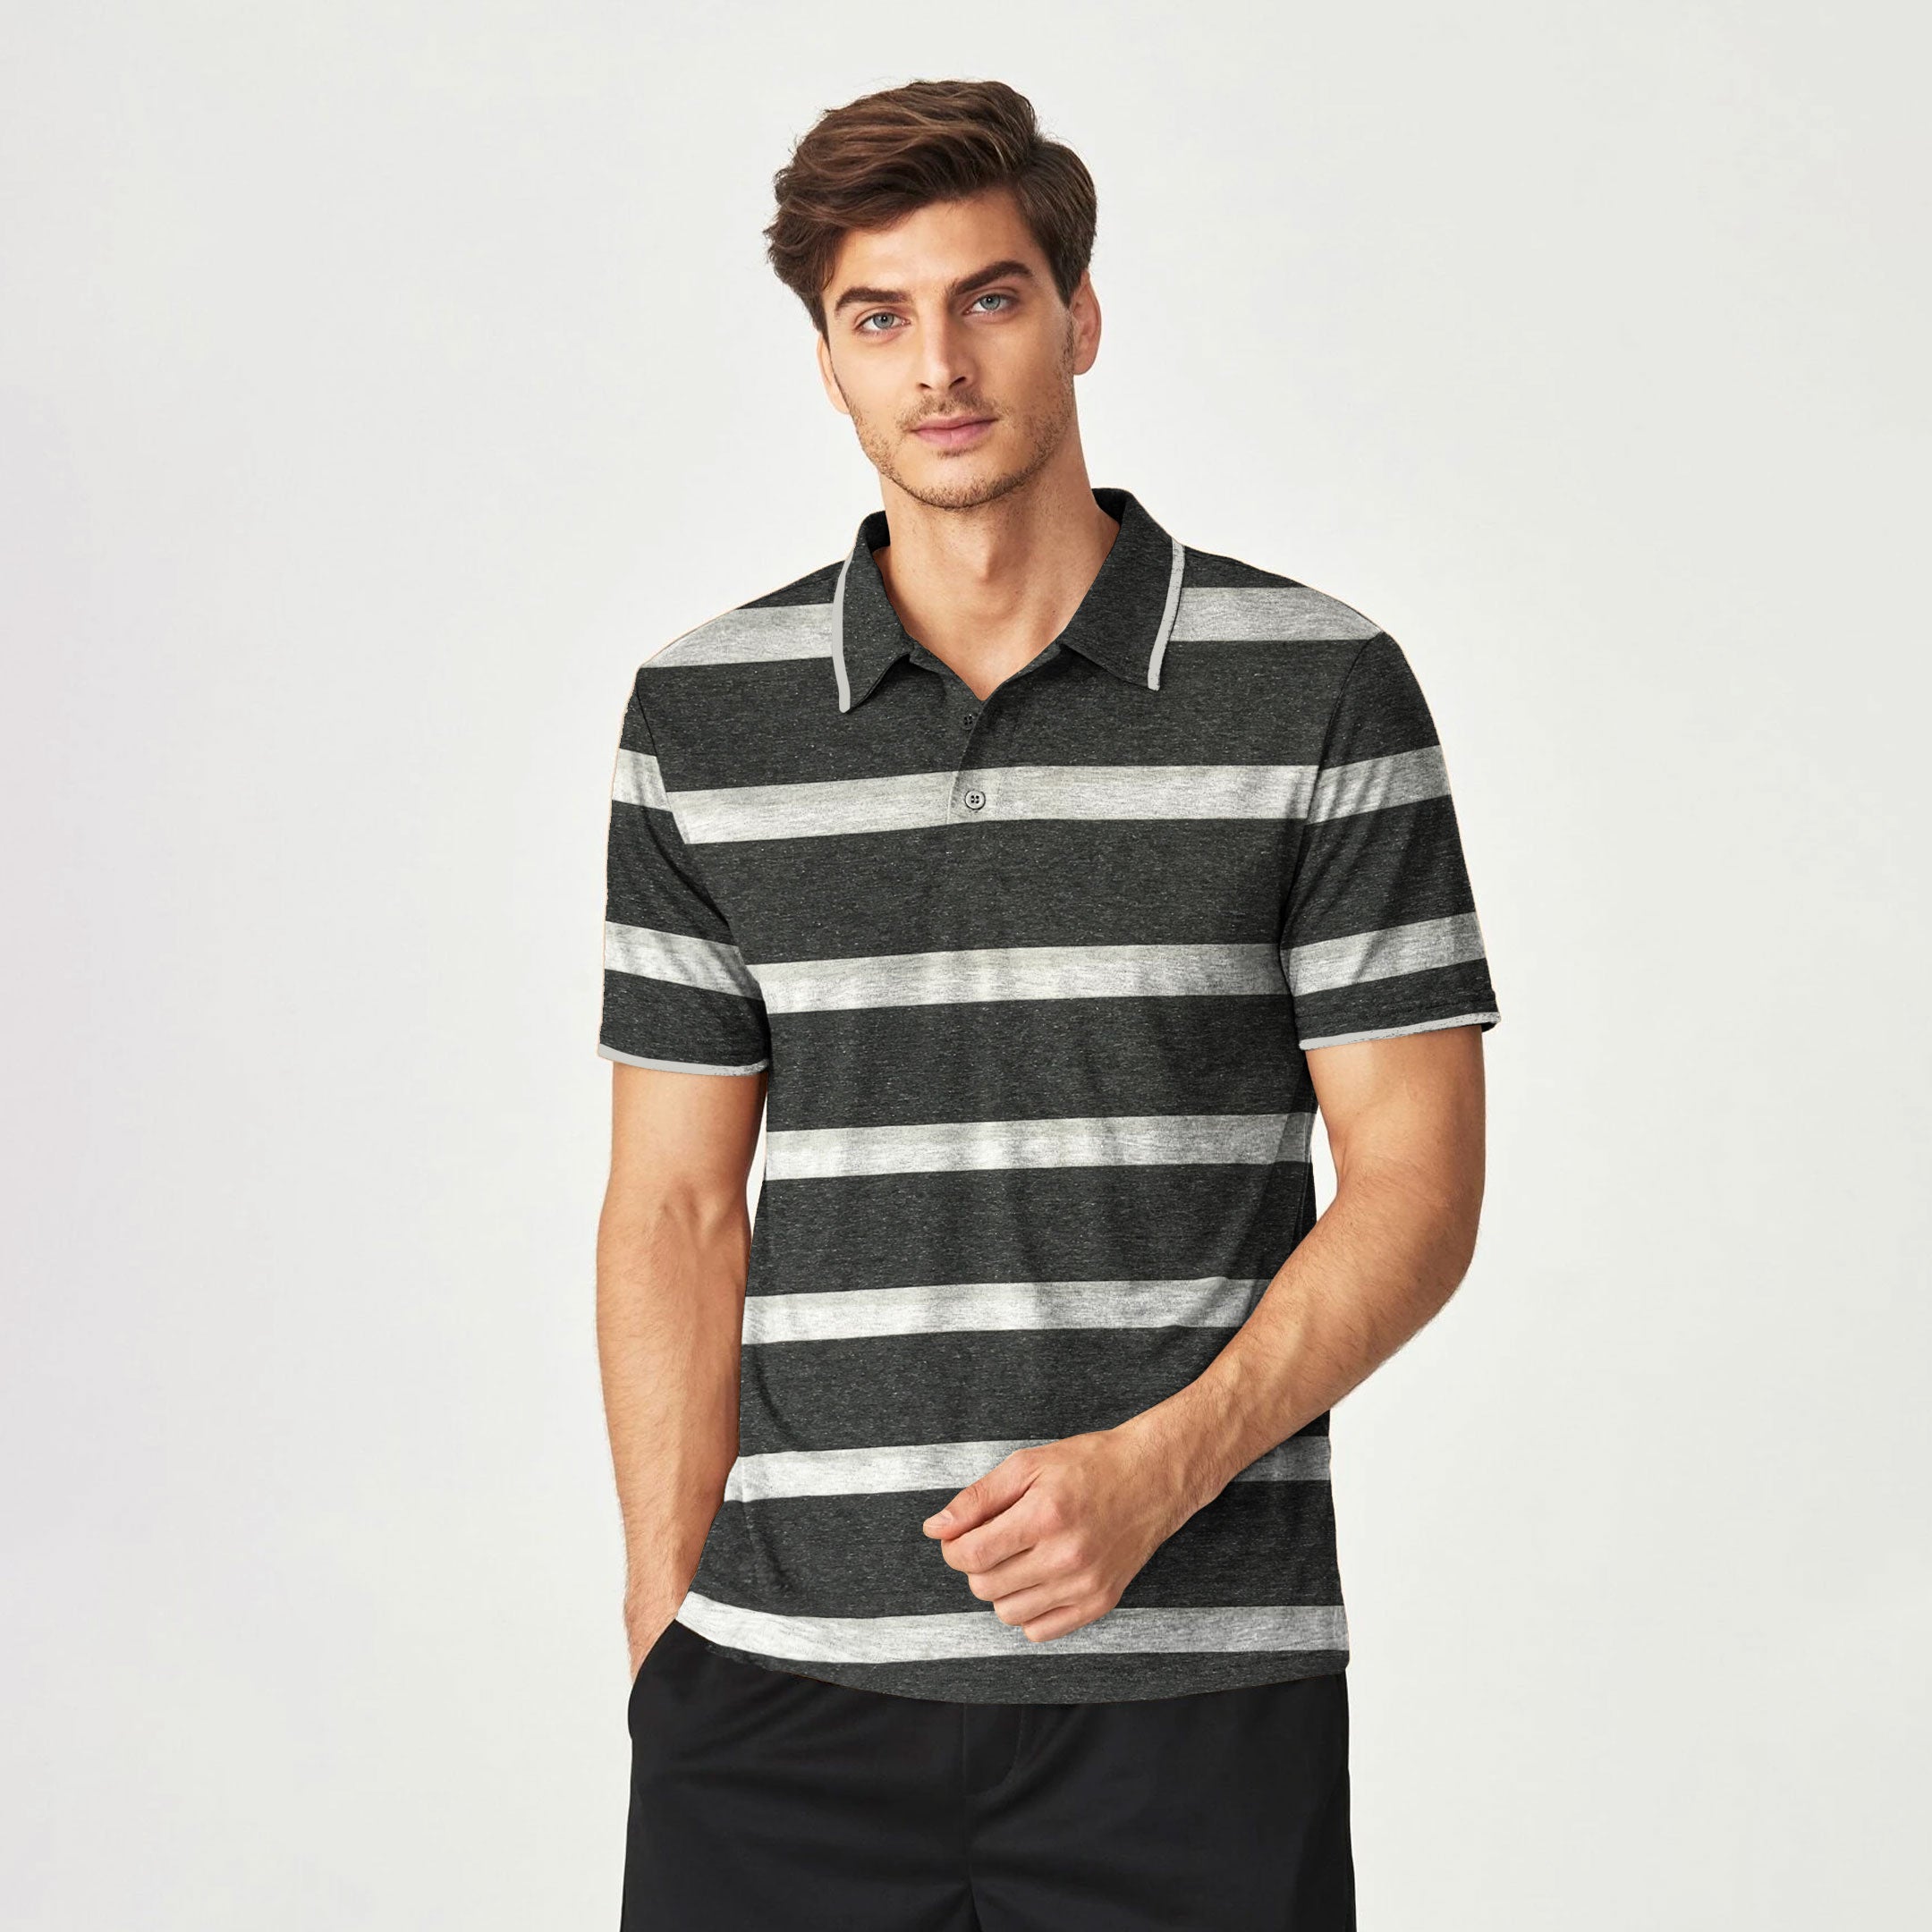 Men's Black & white Stripes Polo Shirt